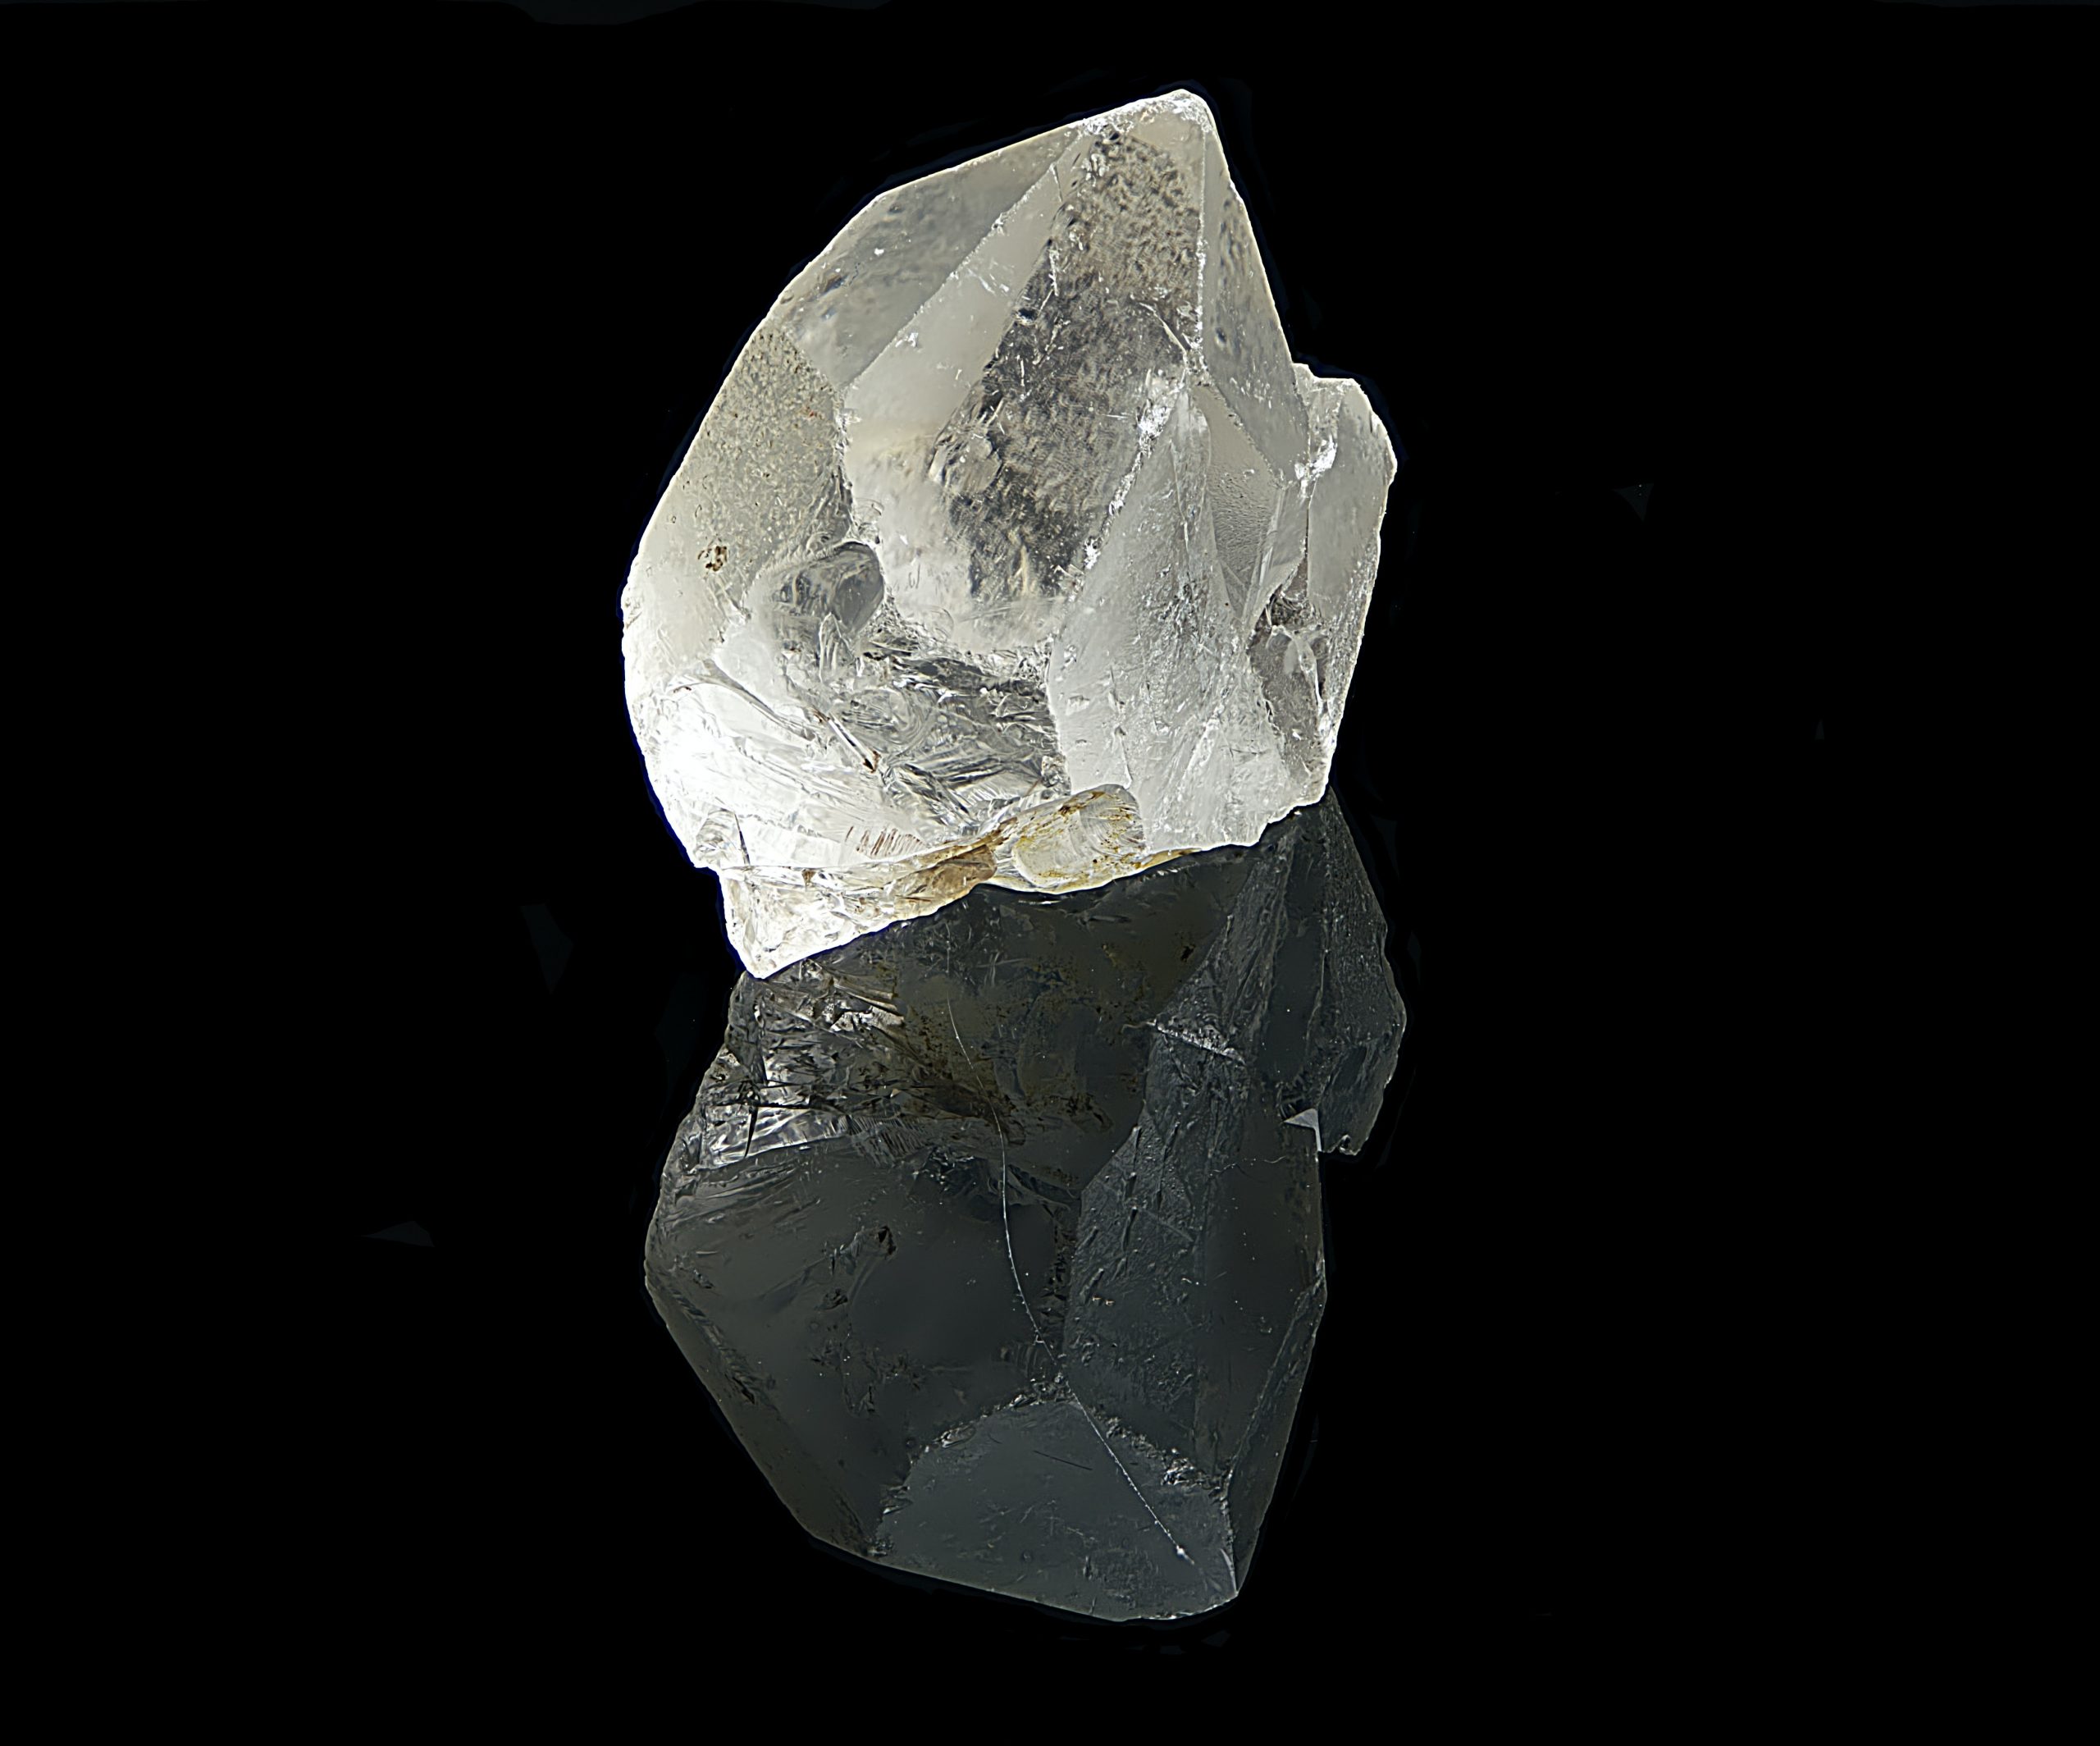 KZN ‘diamonds’ are quartz stones, say experts